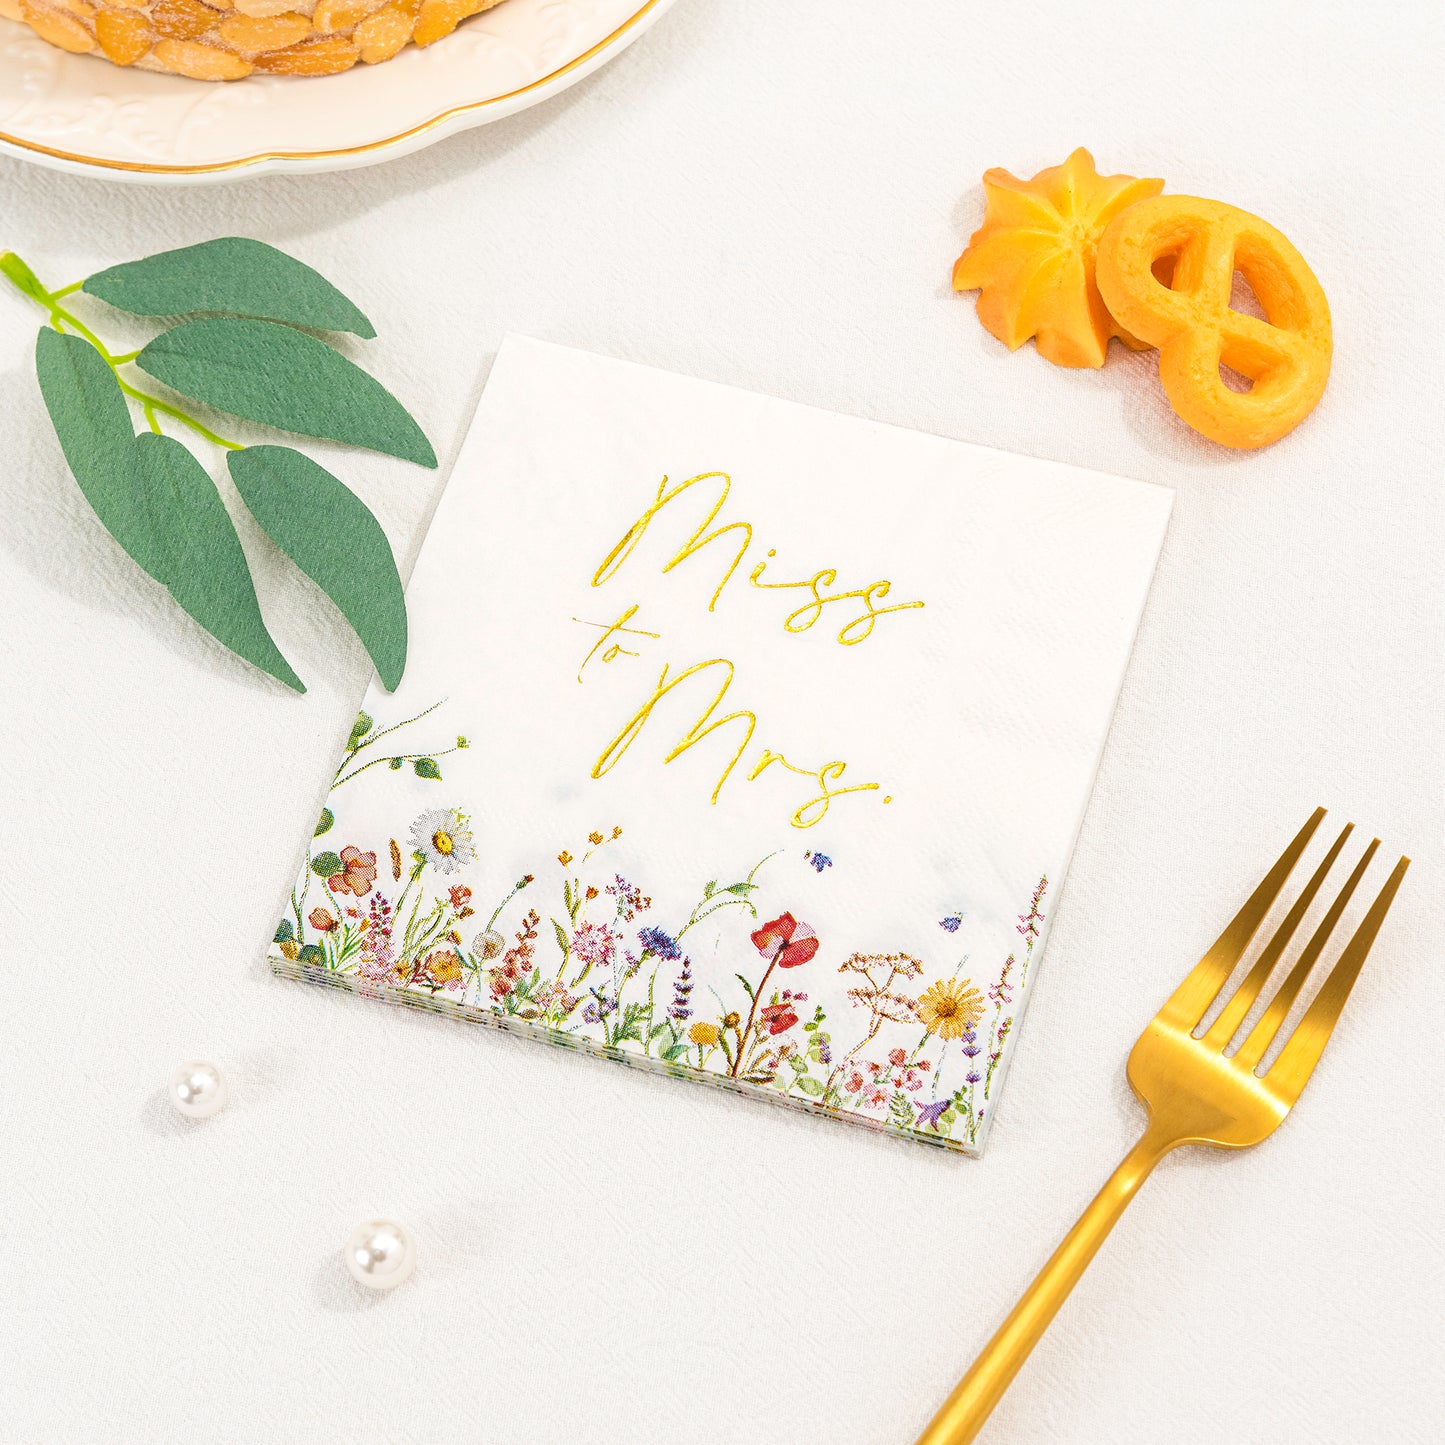 Crisky Floral Bridal Shower Napkins - Gold Foil Miss to Mrs Paper Disposable Napkins for Engagement/Bridal Shower/Bridal/Bachelorette Party Decoration, 3-Ply, 50 Counts